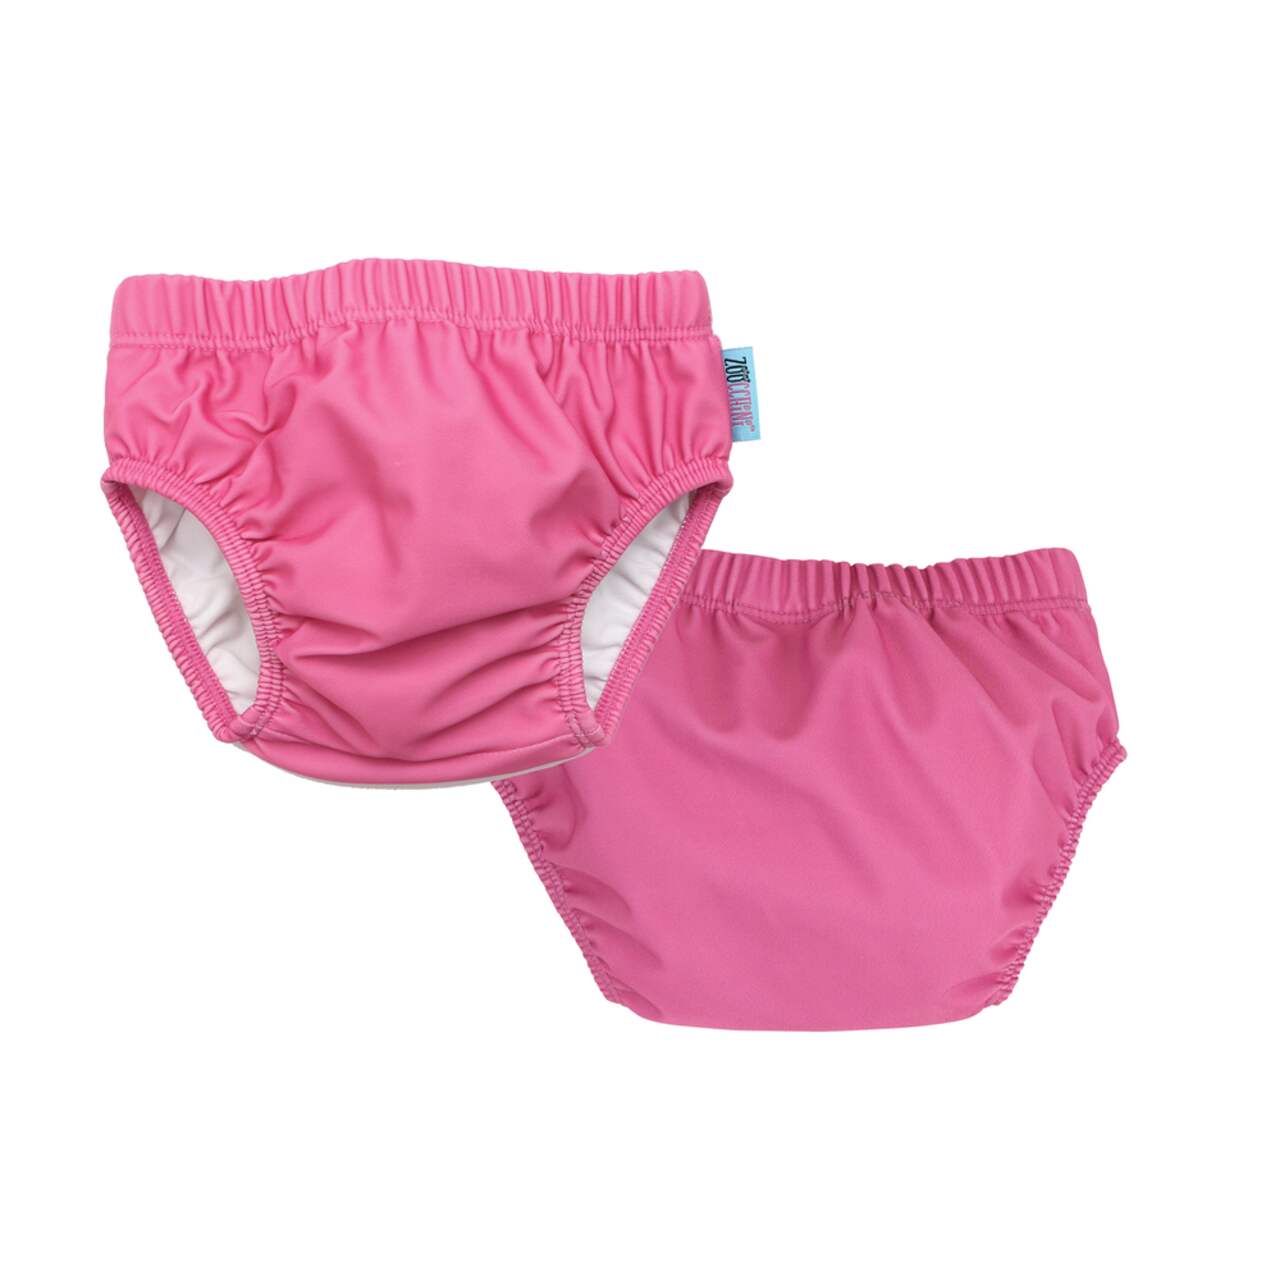 Speedo Girls Swim Diaper Cover Sz Large XL 18-36 Months 25-33lbs Pink  Toddler 